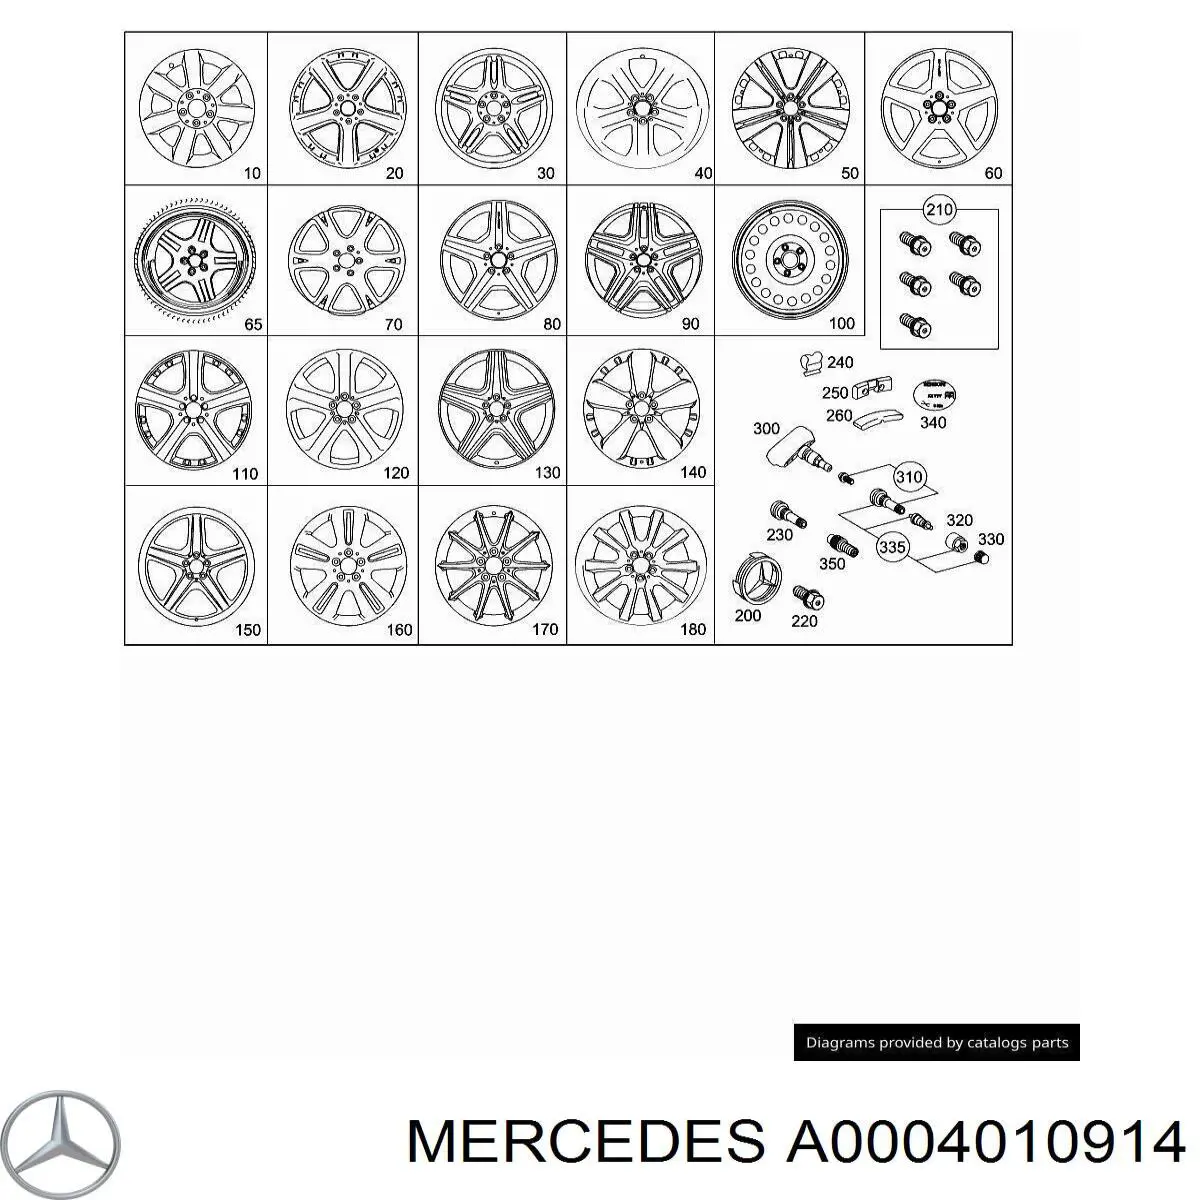 Крепление датчика давления воздуха в шинах на Mercedes ML/GLE (W164)